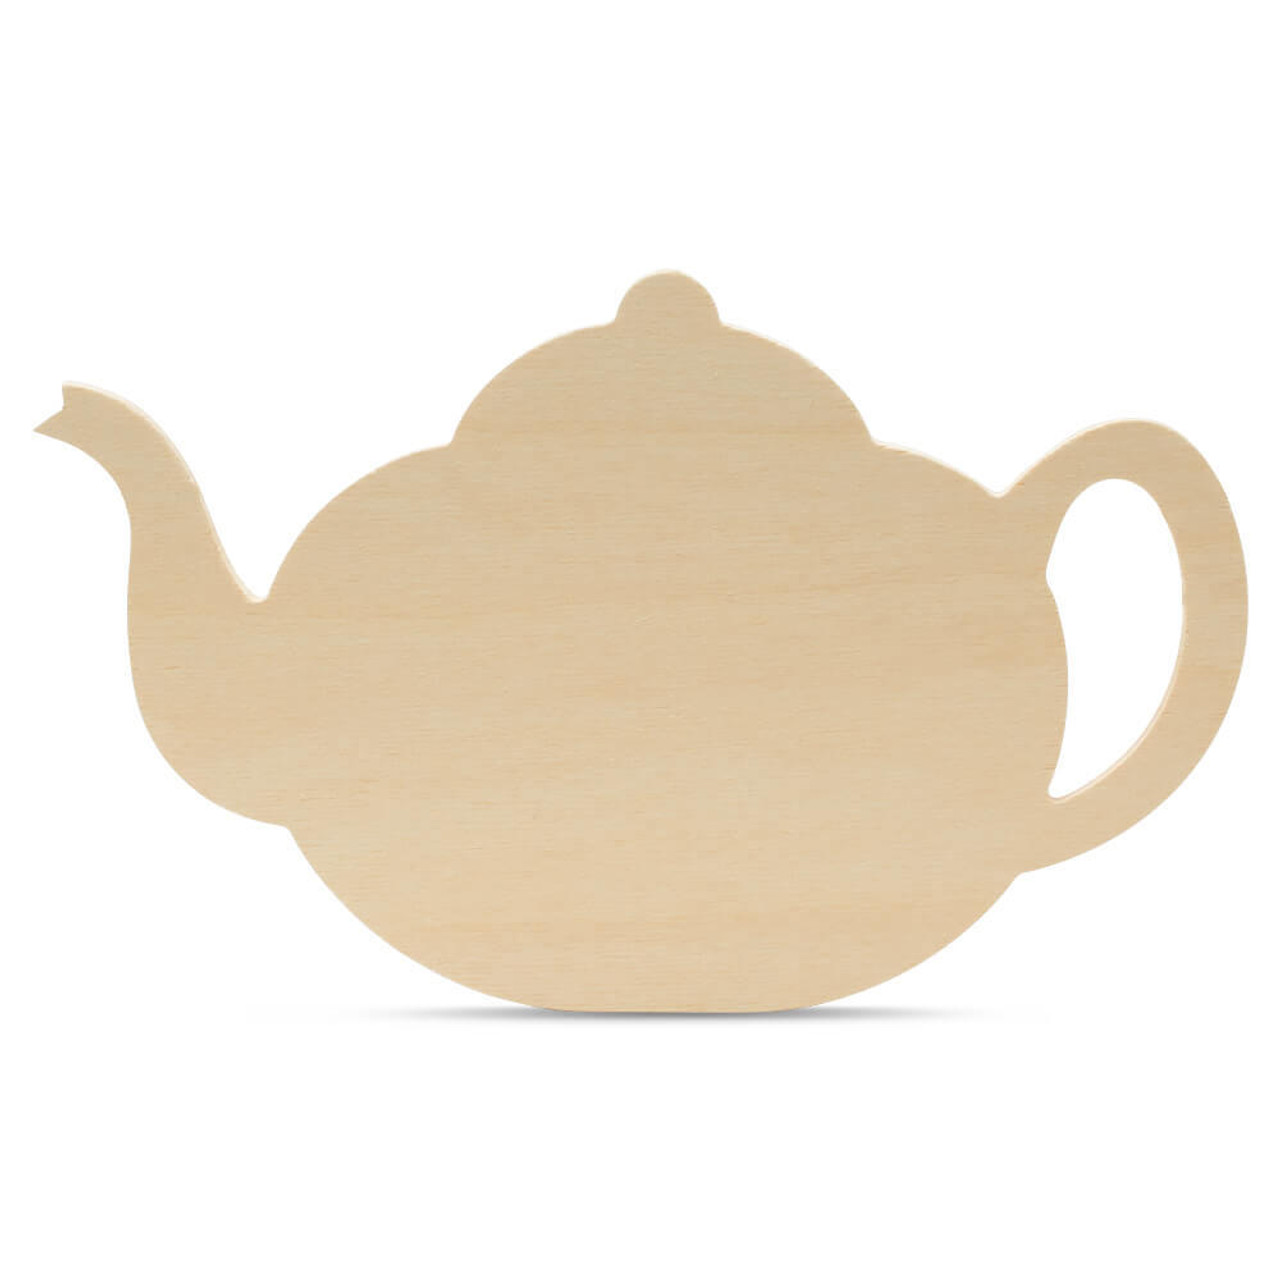 Teapot Shape Unfinished Wood Craft Shapes Variety of Sizes